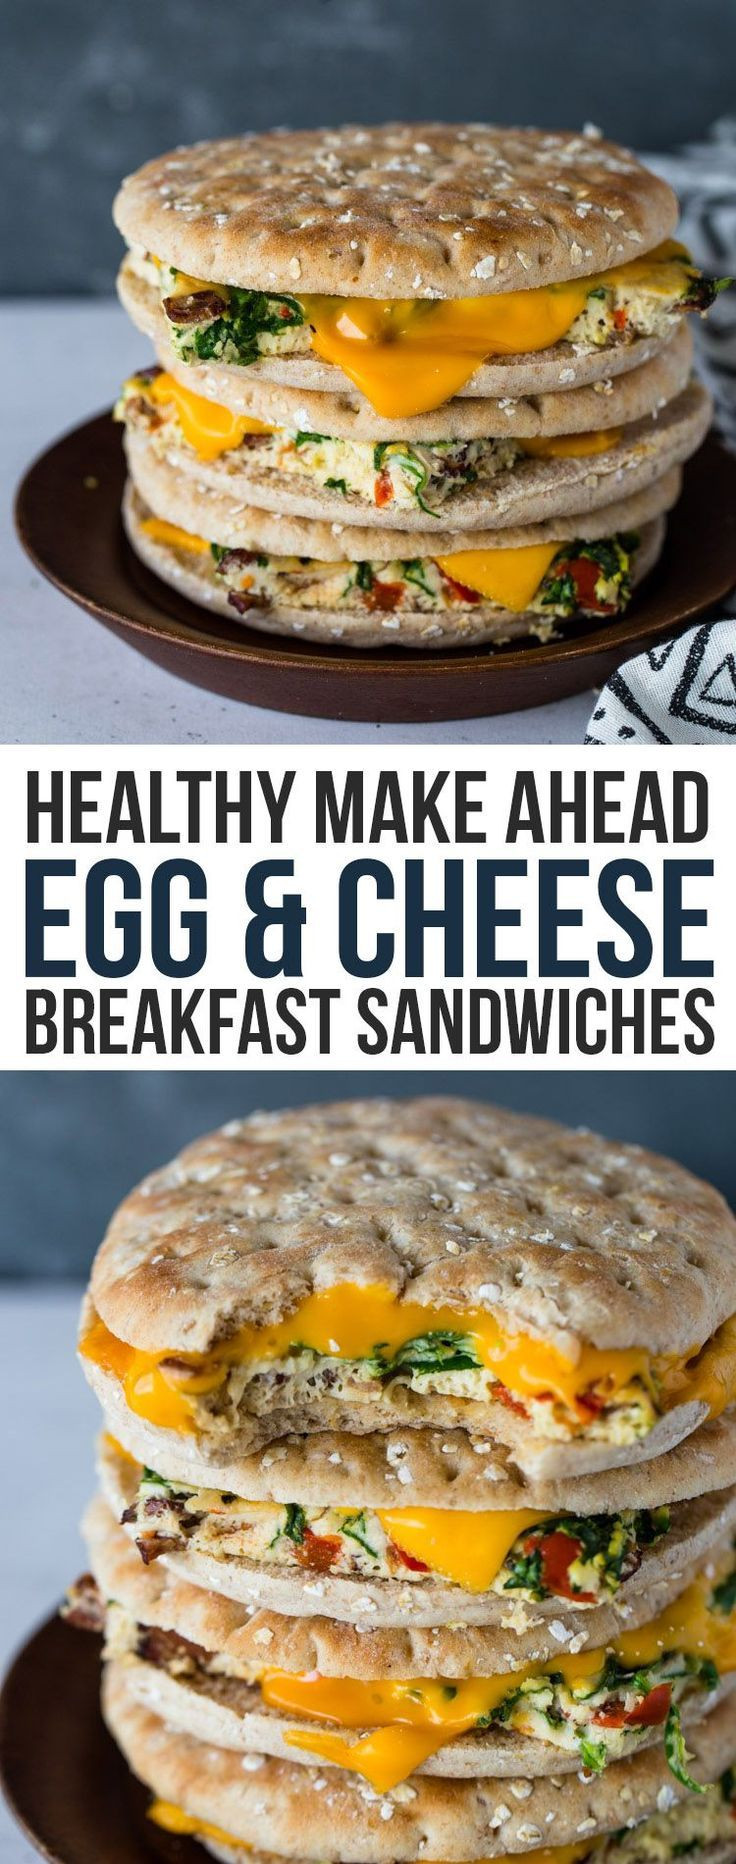 Make Ahead Breakfast Eggs
 Healthy Make Ahead Egg & Cheese Breakfast Sandwiches with